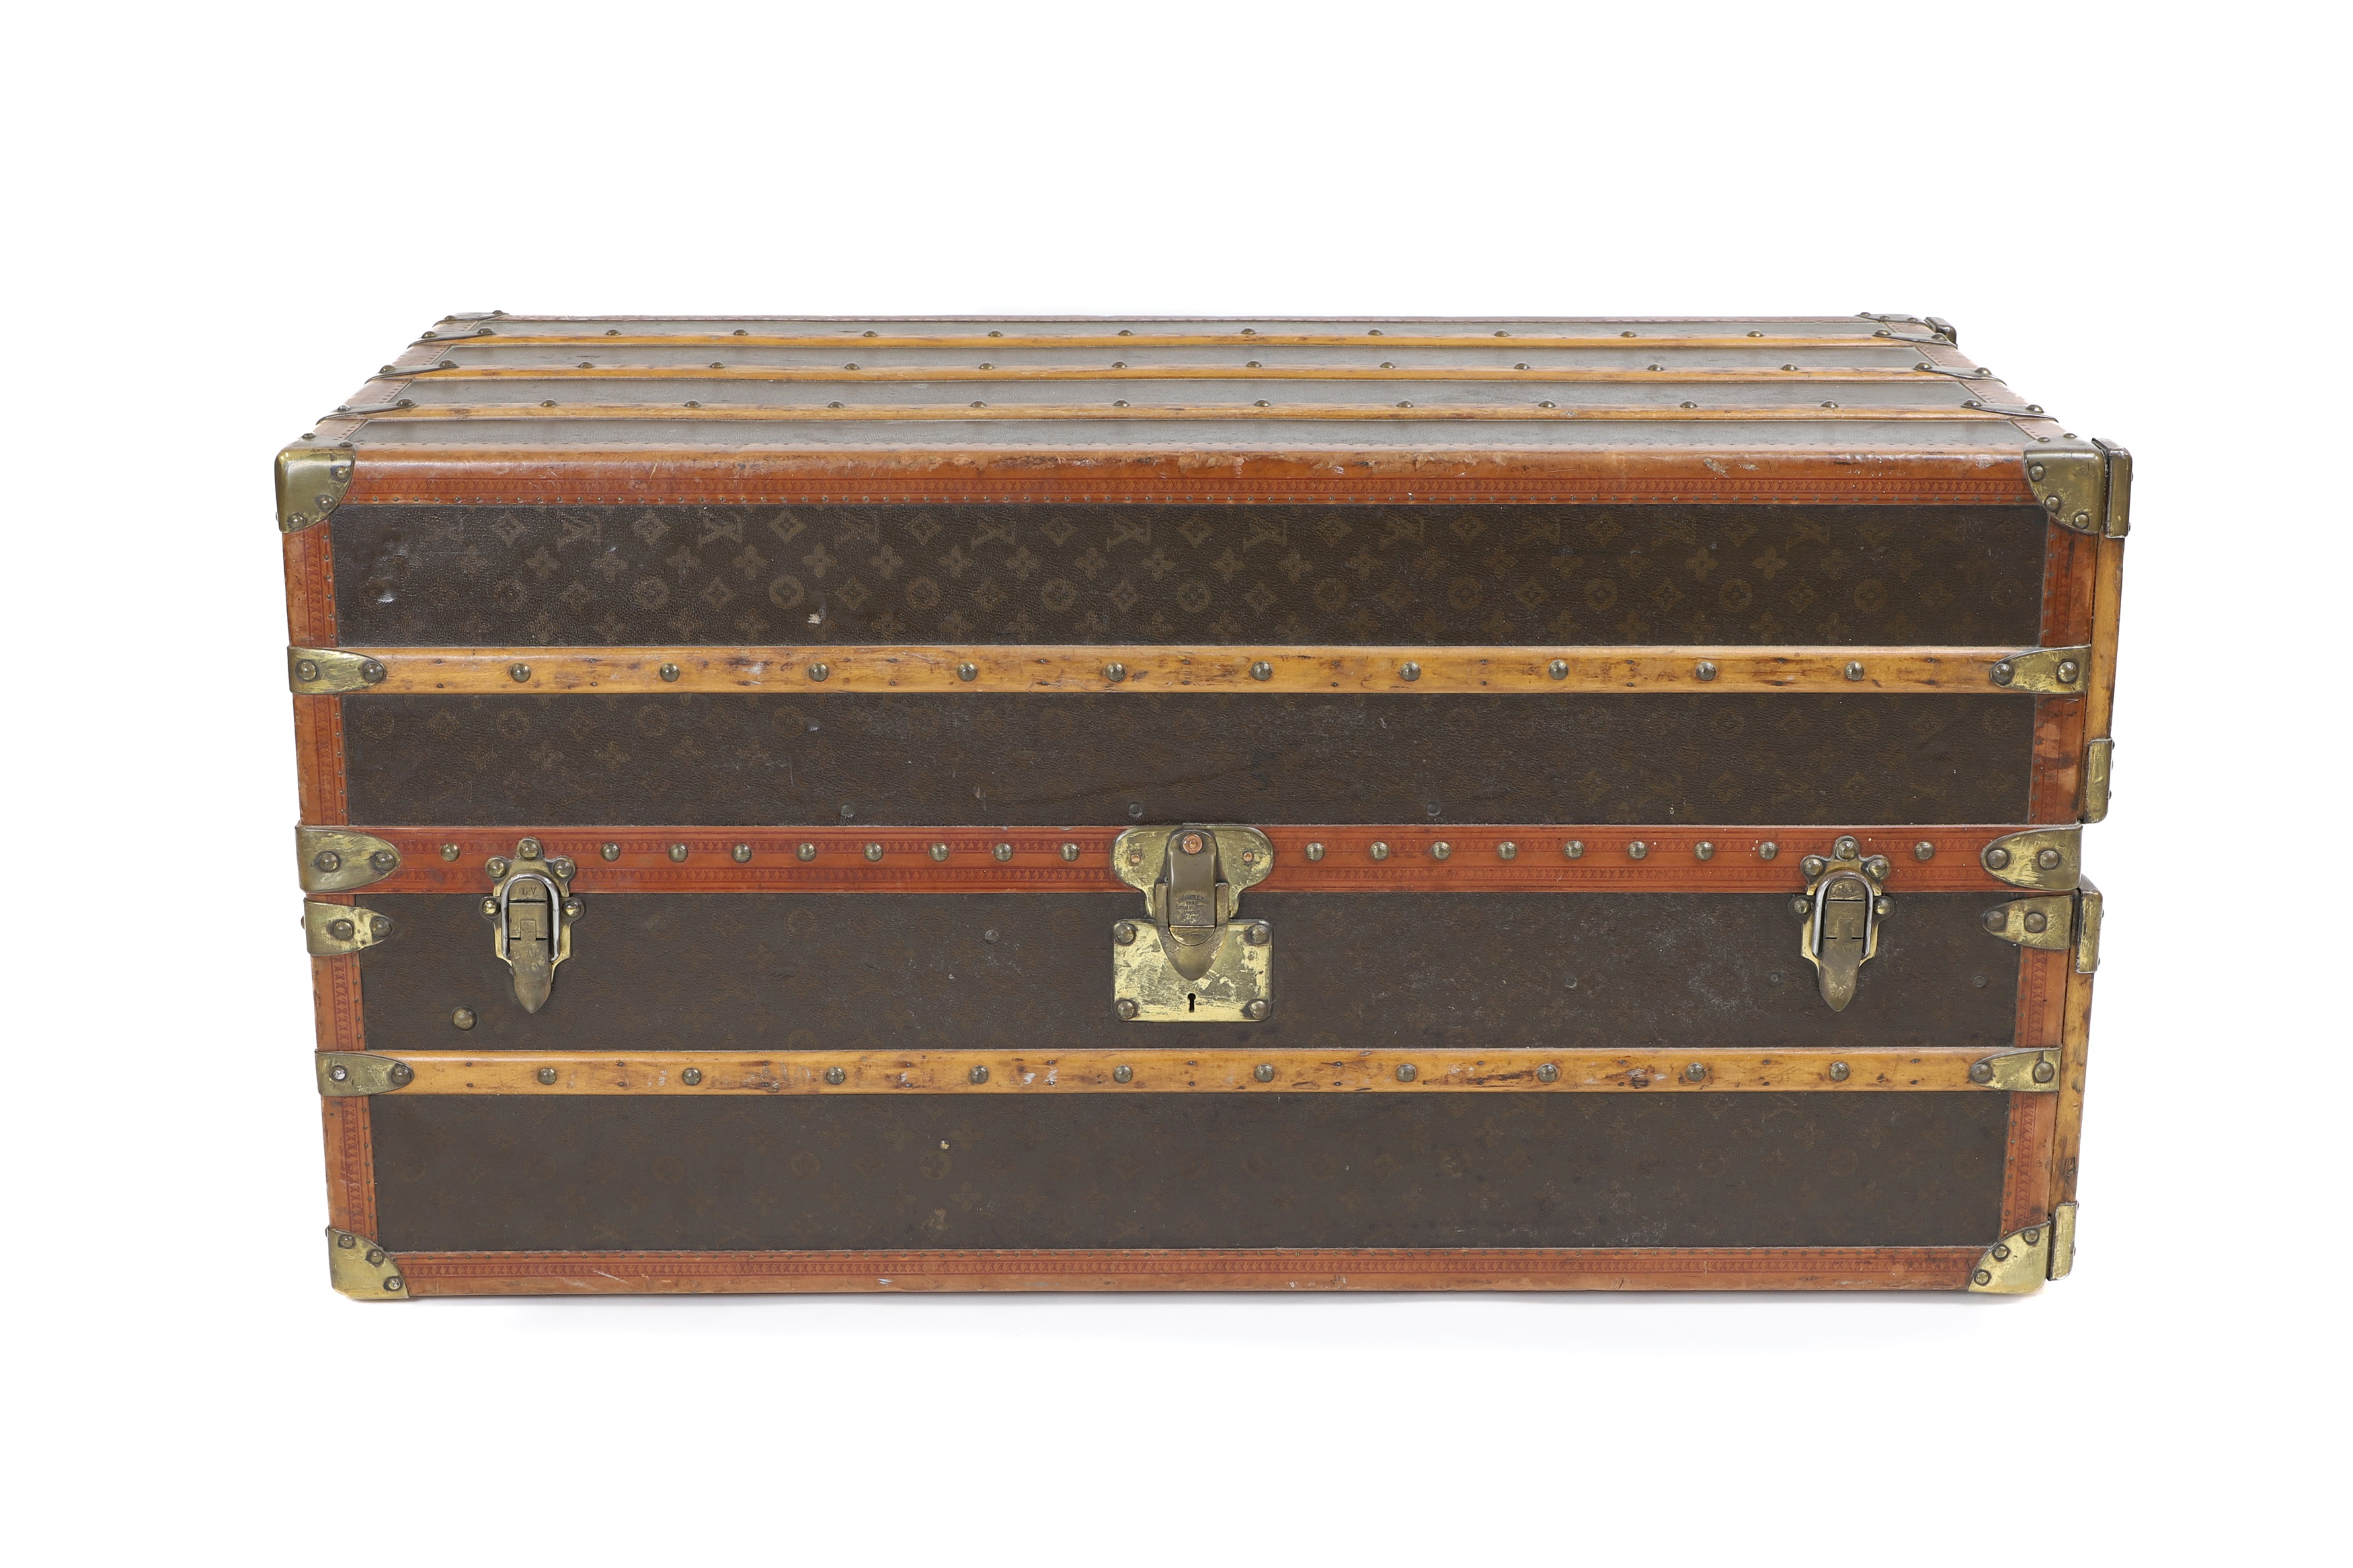 A Louis Vuitton monogrammed canvas wardrobe trunk (£8,000-12,000)